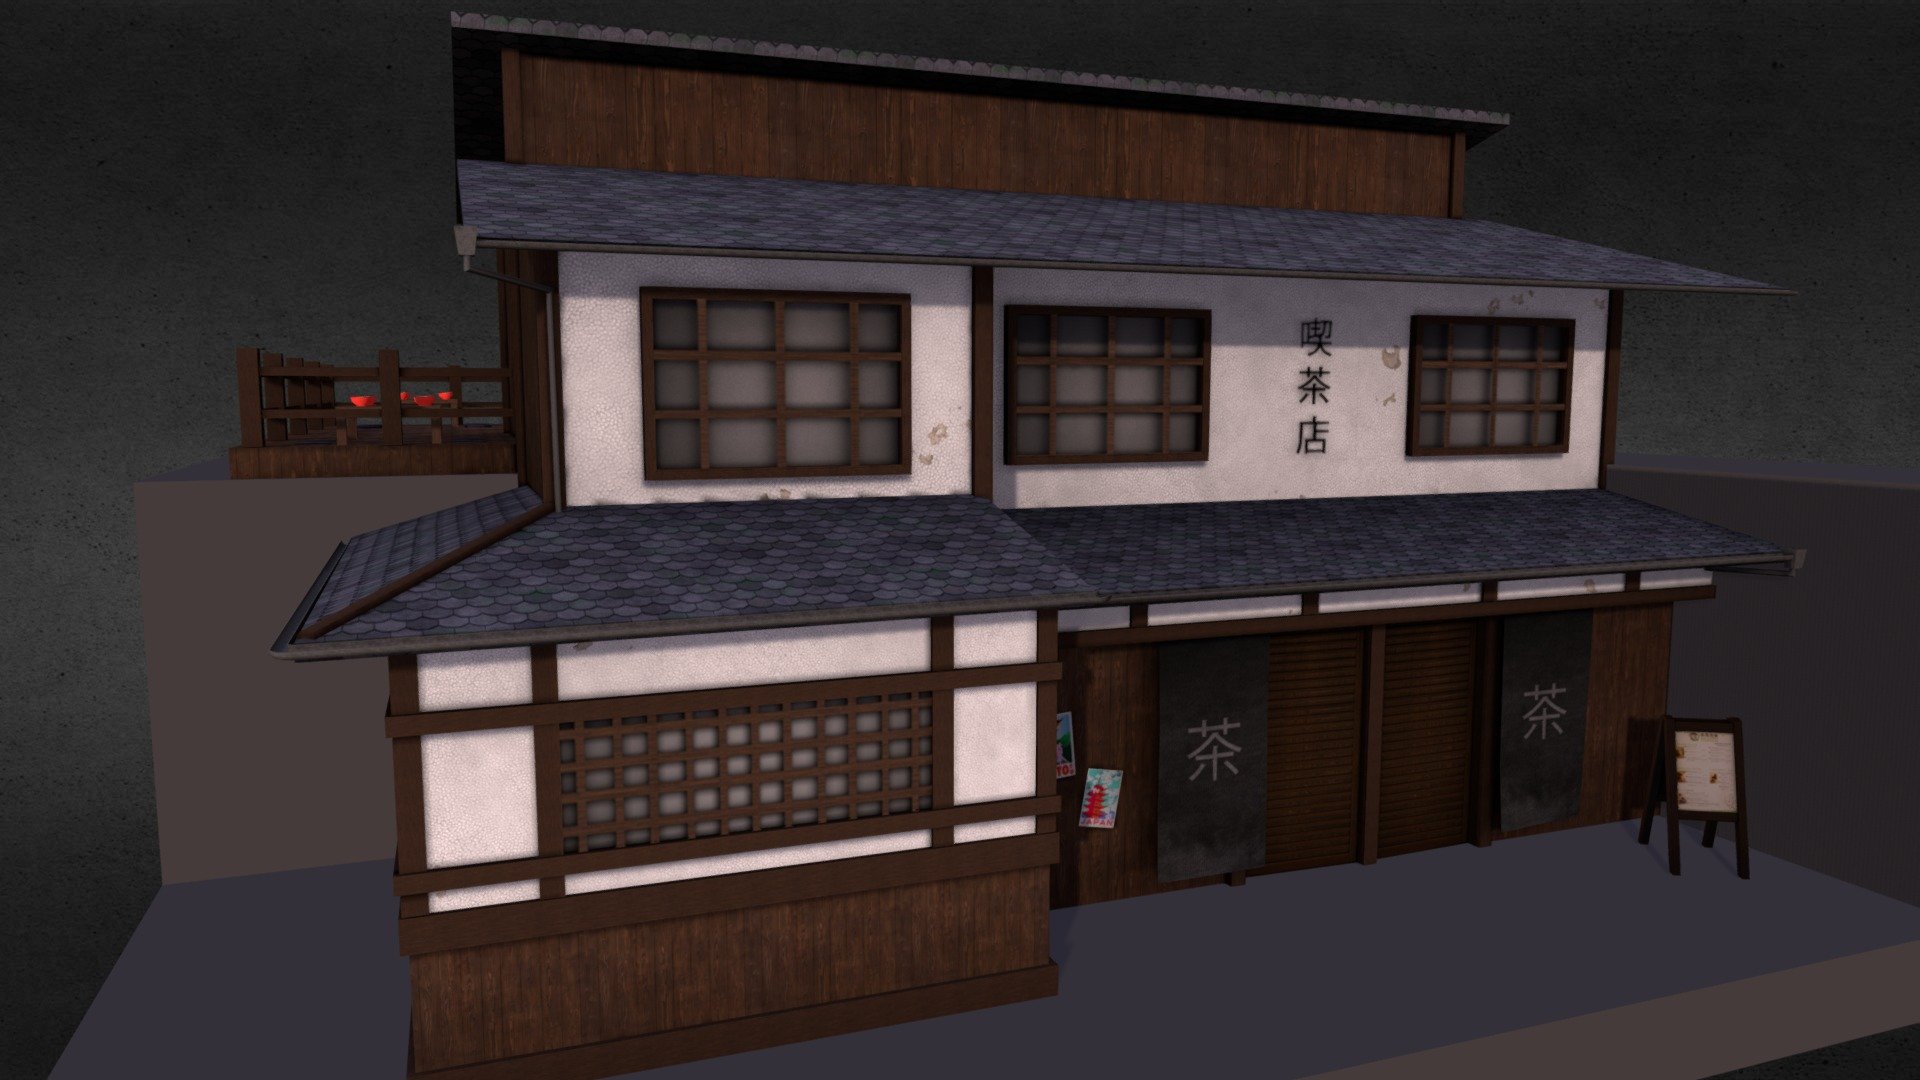 Kyoto, Japan - Tea Shop (+ Terrace on the back)